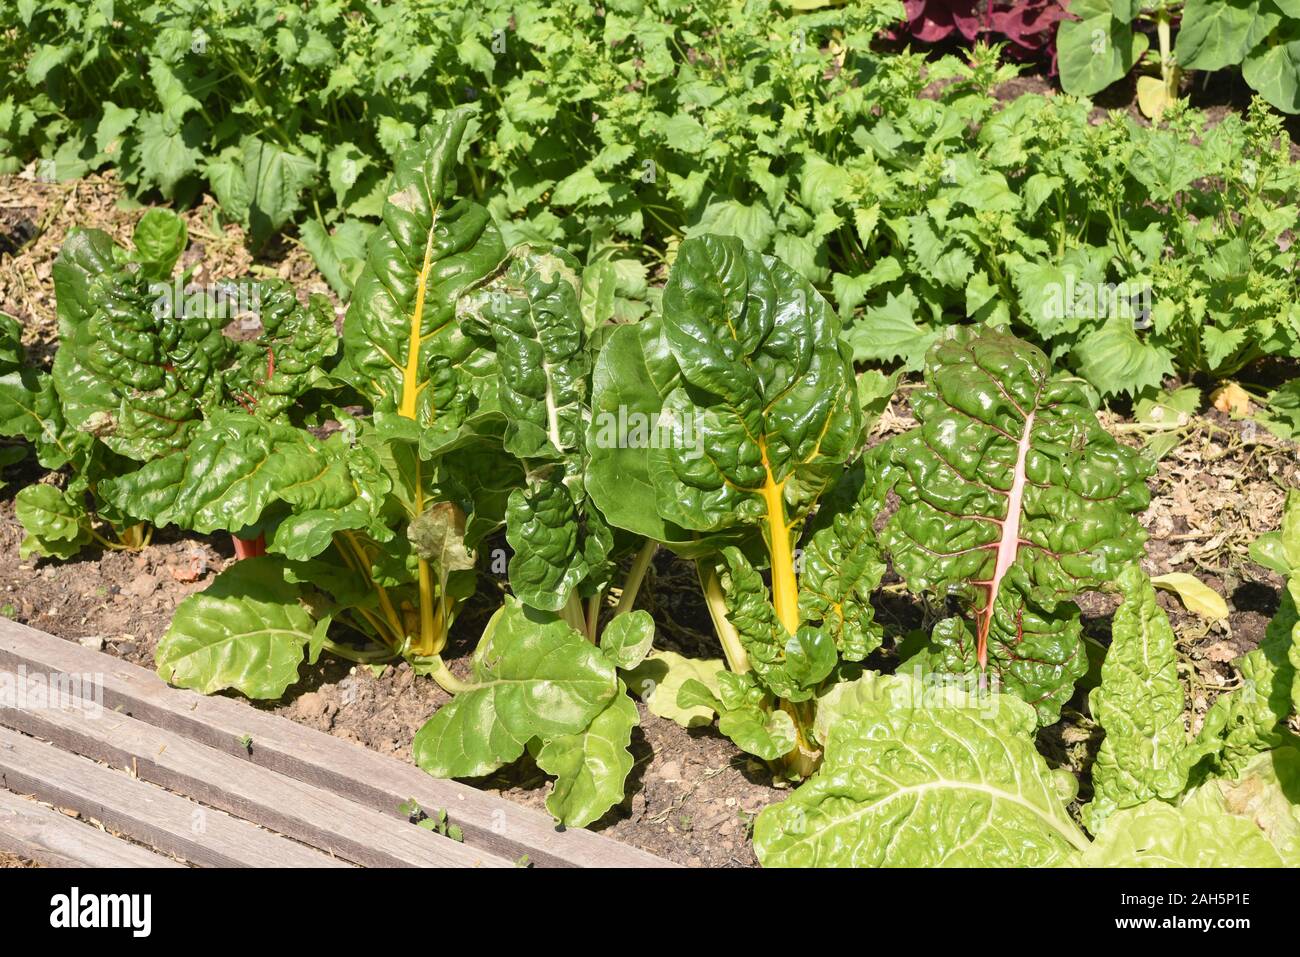 Mangold, Beta vulgaris, ist eine Gemuese- und Heilpflanze. Swiss chard, Beta vulgaris, is a vegetable and medicinal plant. Stock Photo